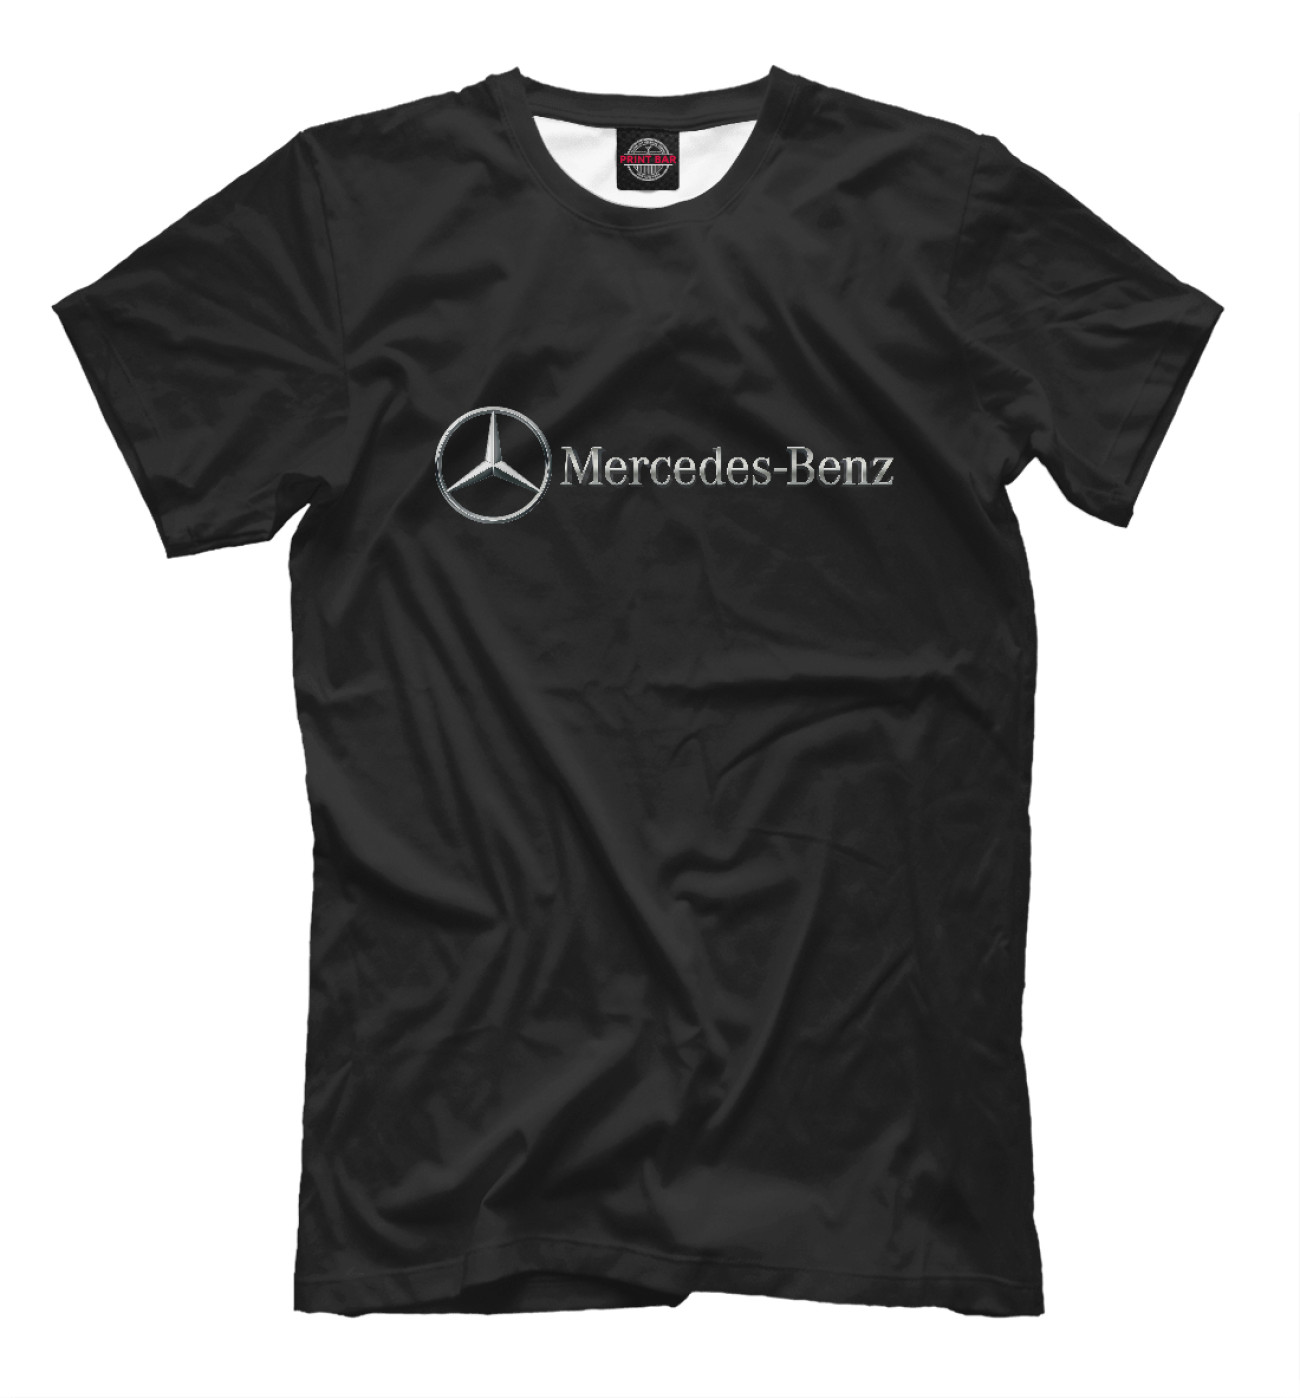 Мужская Футболка Mercedes Benz, артикул: MER-365515-fut-2